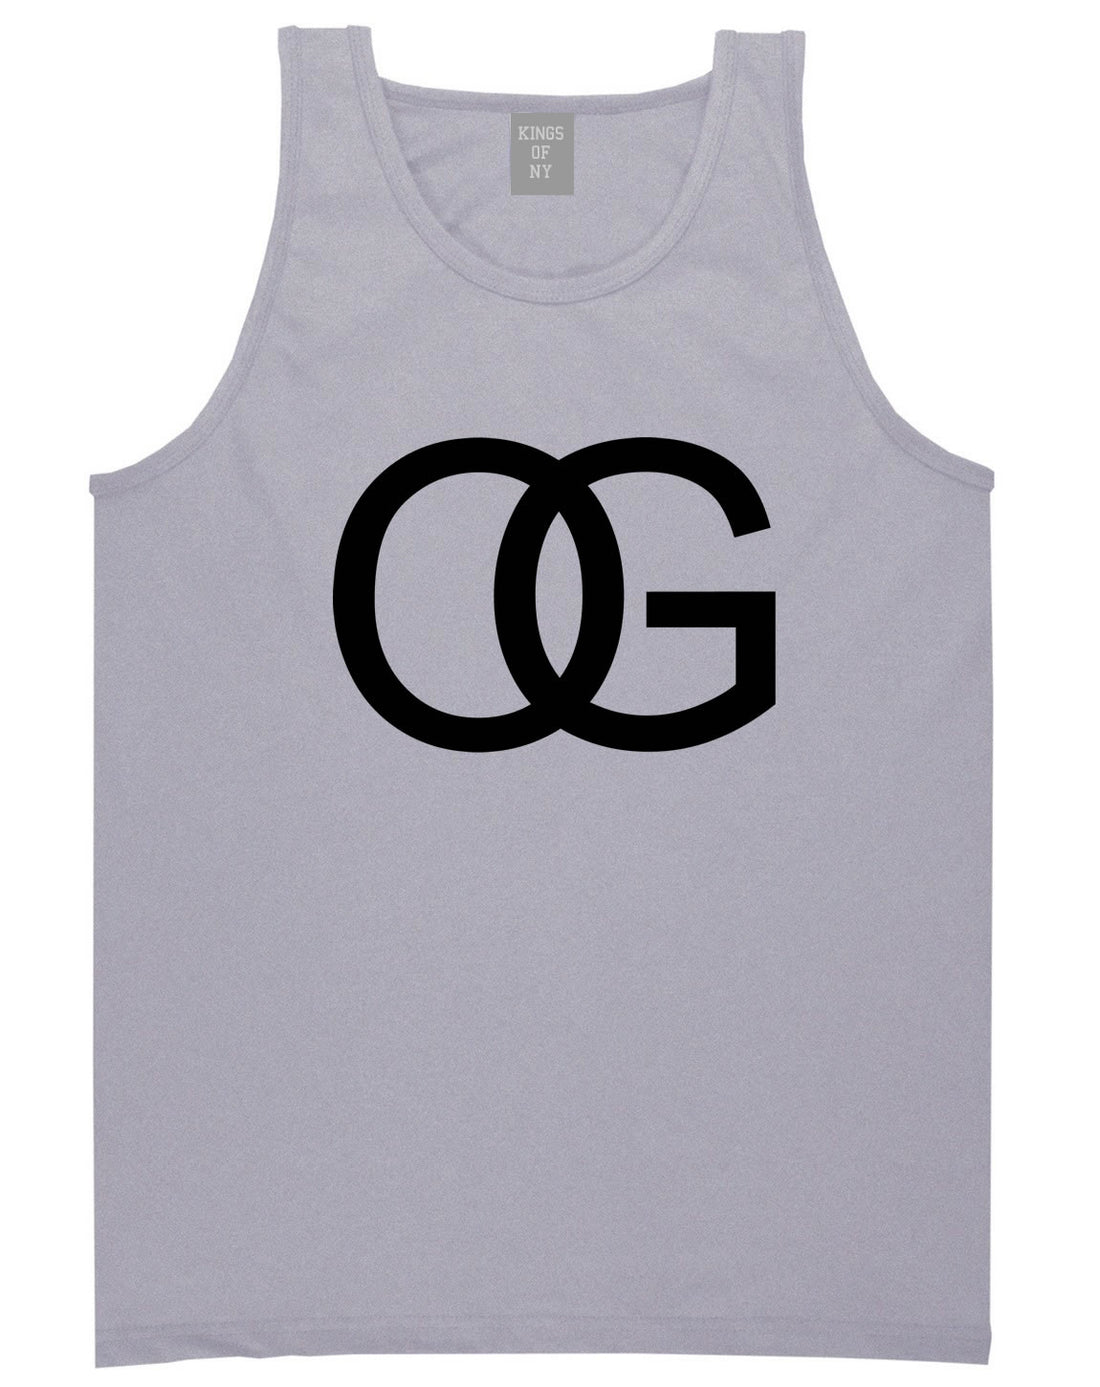 OG Original Gangsta Gangster Style Green Tank Top In Grey by Kings Of NY